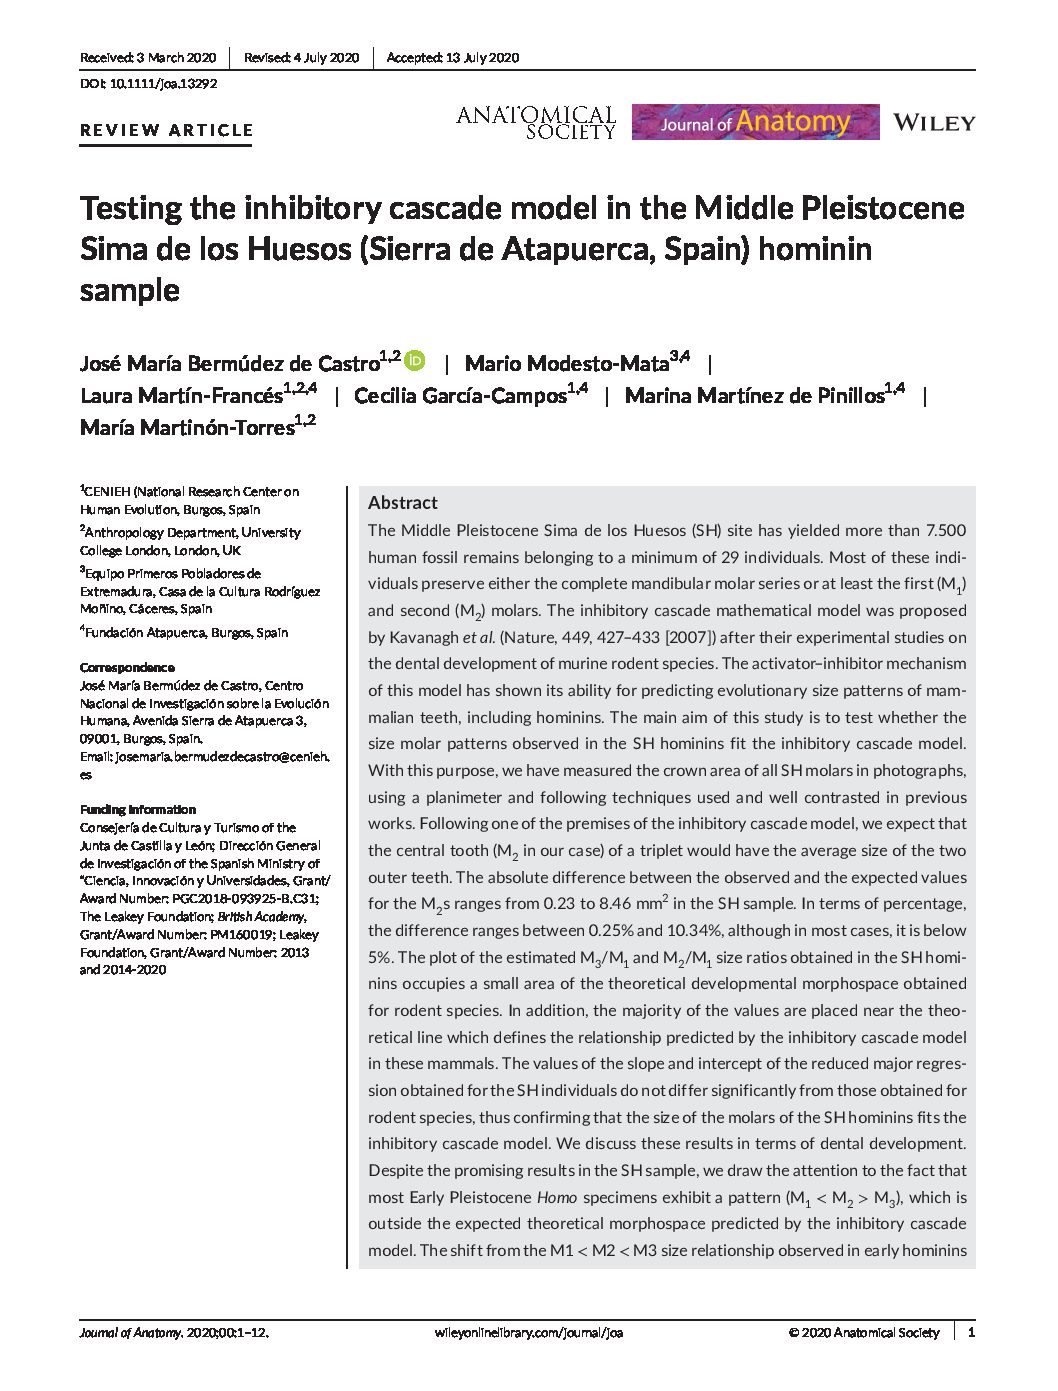 Testing the inhibitory cascade model in the Middle Pleistocene Sima de los Huesos (Sierra de Atapuerca, Spain) hominin sample